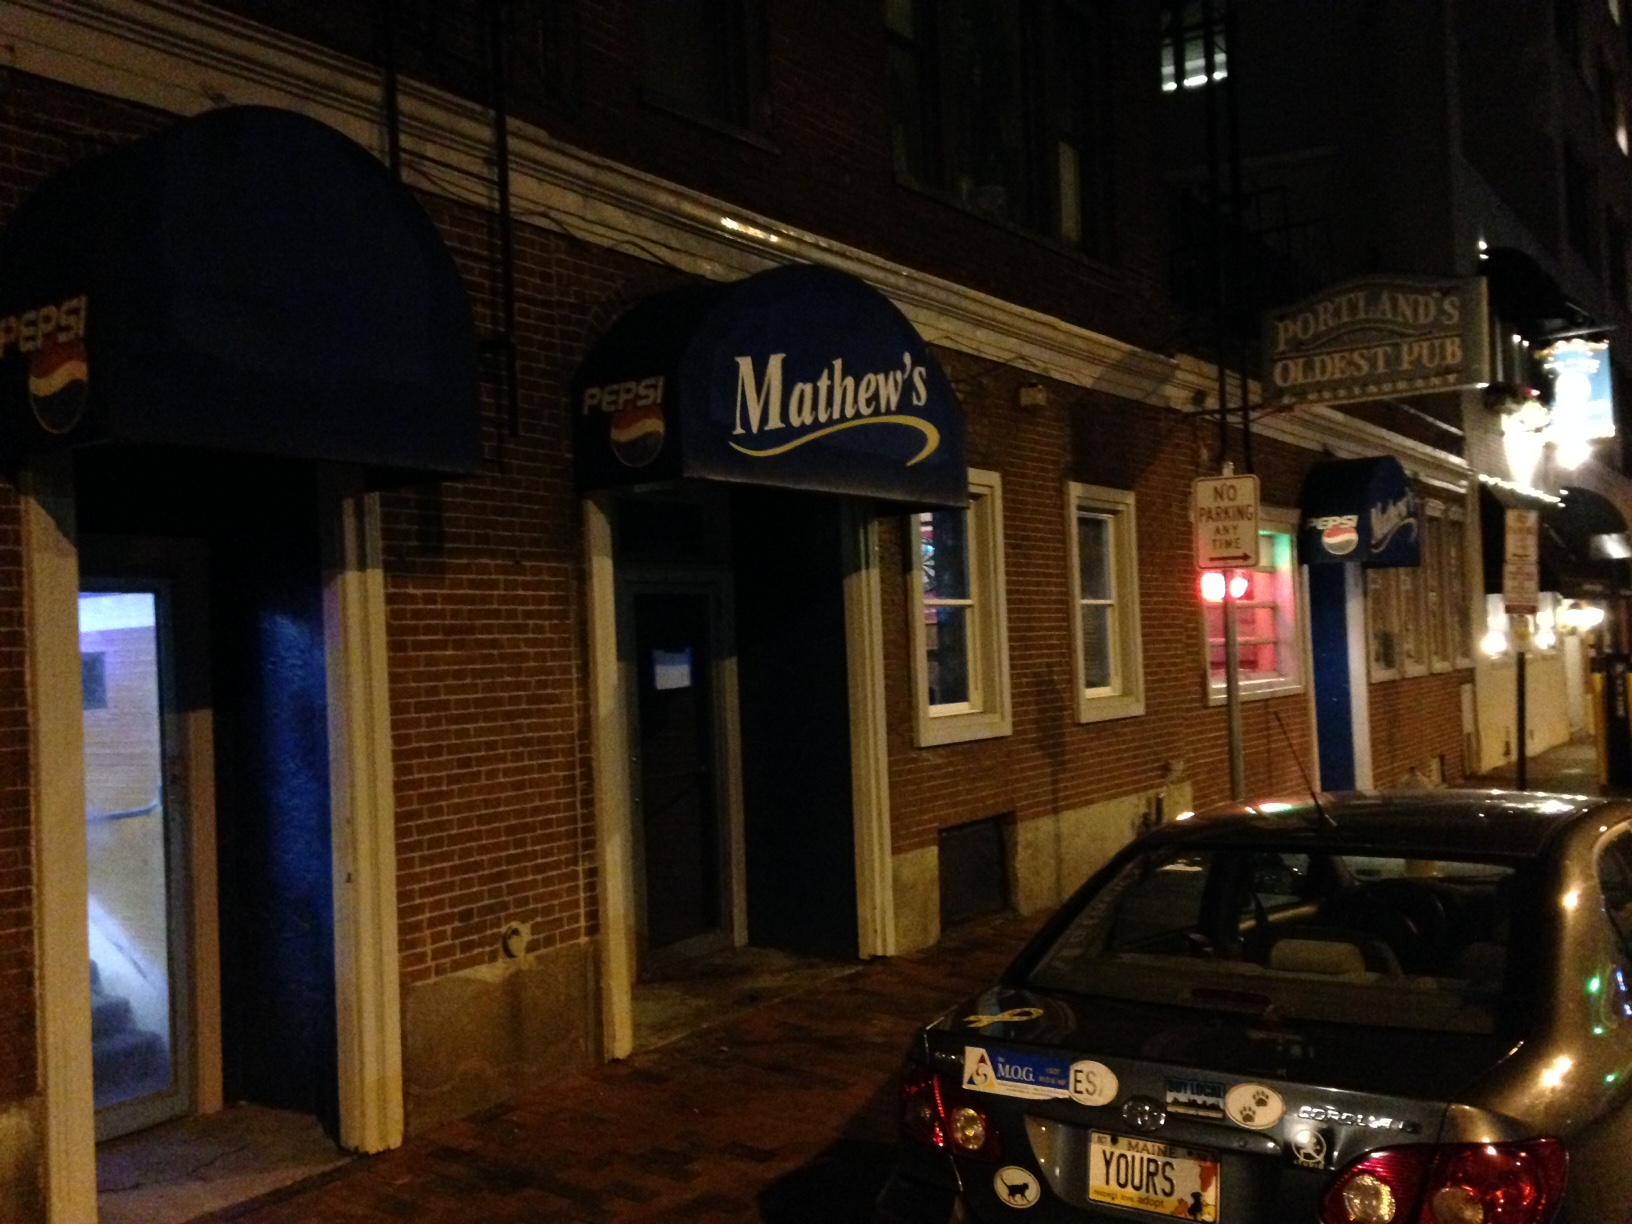 Mathew's, "Portland's Oldest Pub."